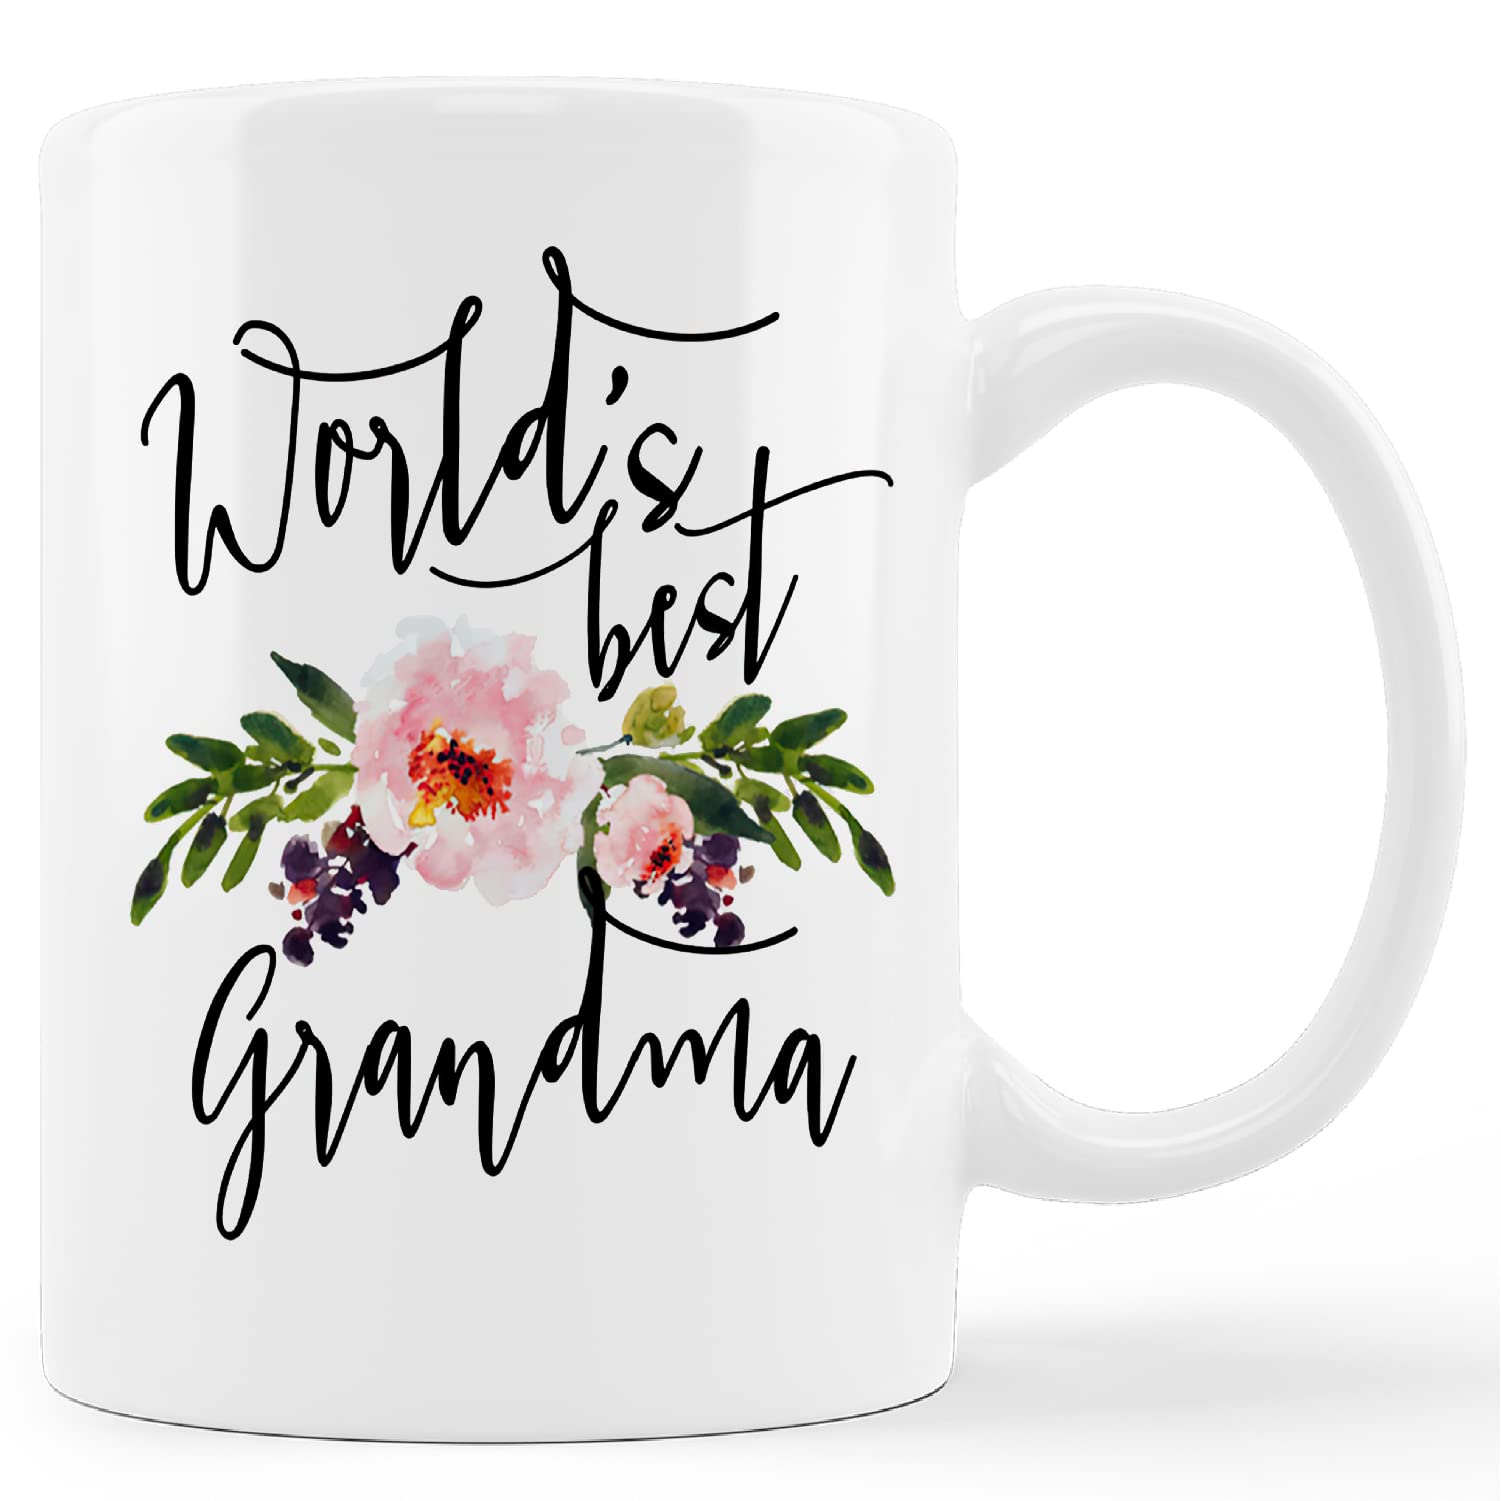 kunlisa Best Grandma Mug Cup,World's Best Grandma Floral Ceramic Mug-11oz Coffee Milk Tea Mug Cup,Grandmother Grandma Birthday Mother's Day Gifts From Grandson Granddaughter Grandkids